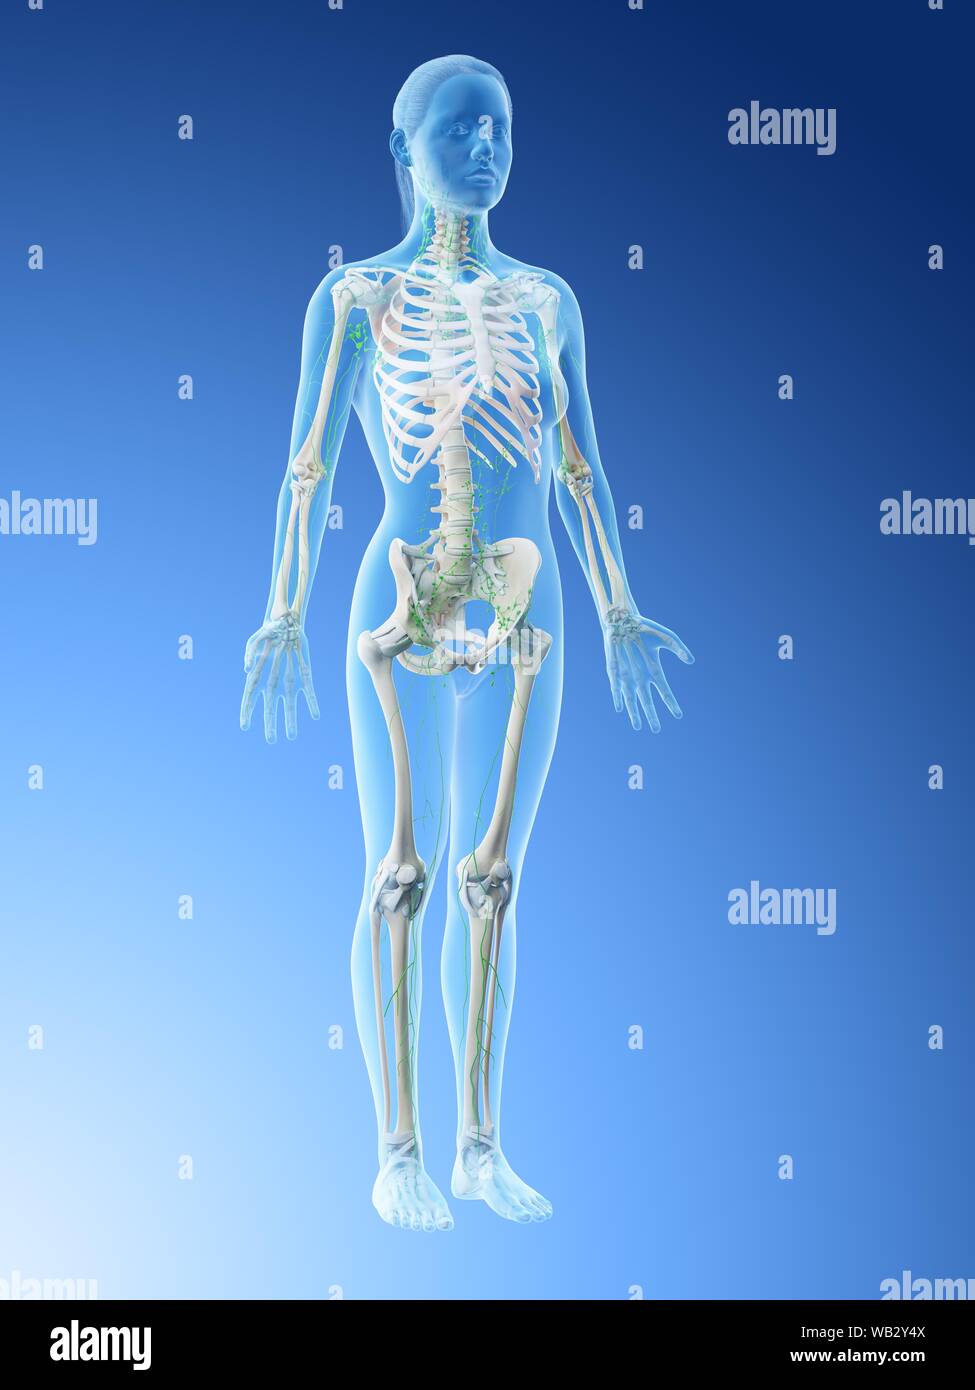 Female lymphatic system, computer illustration Stock Photo - Alamy